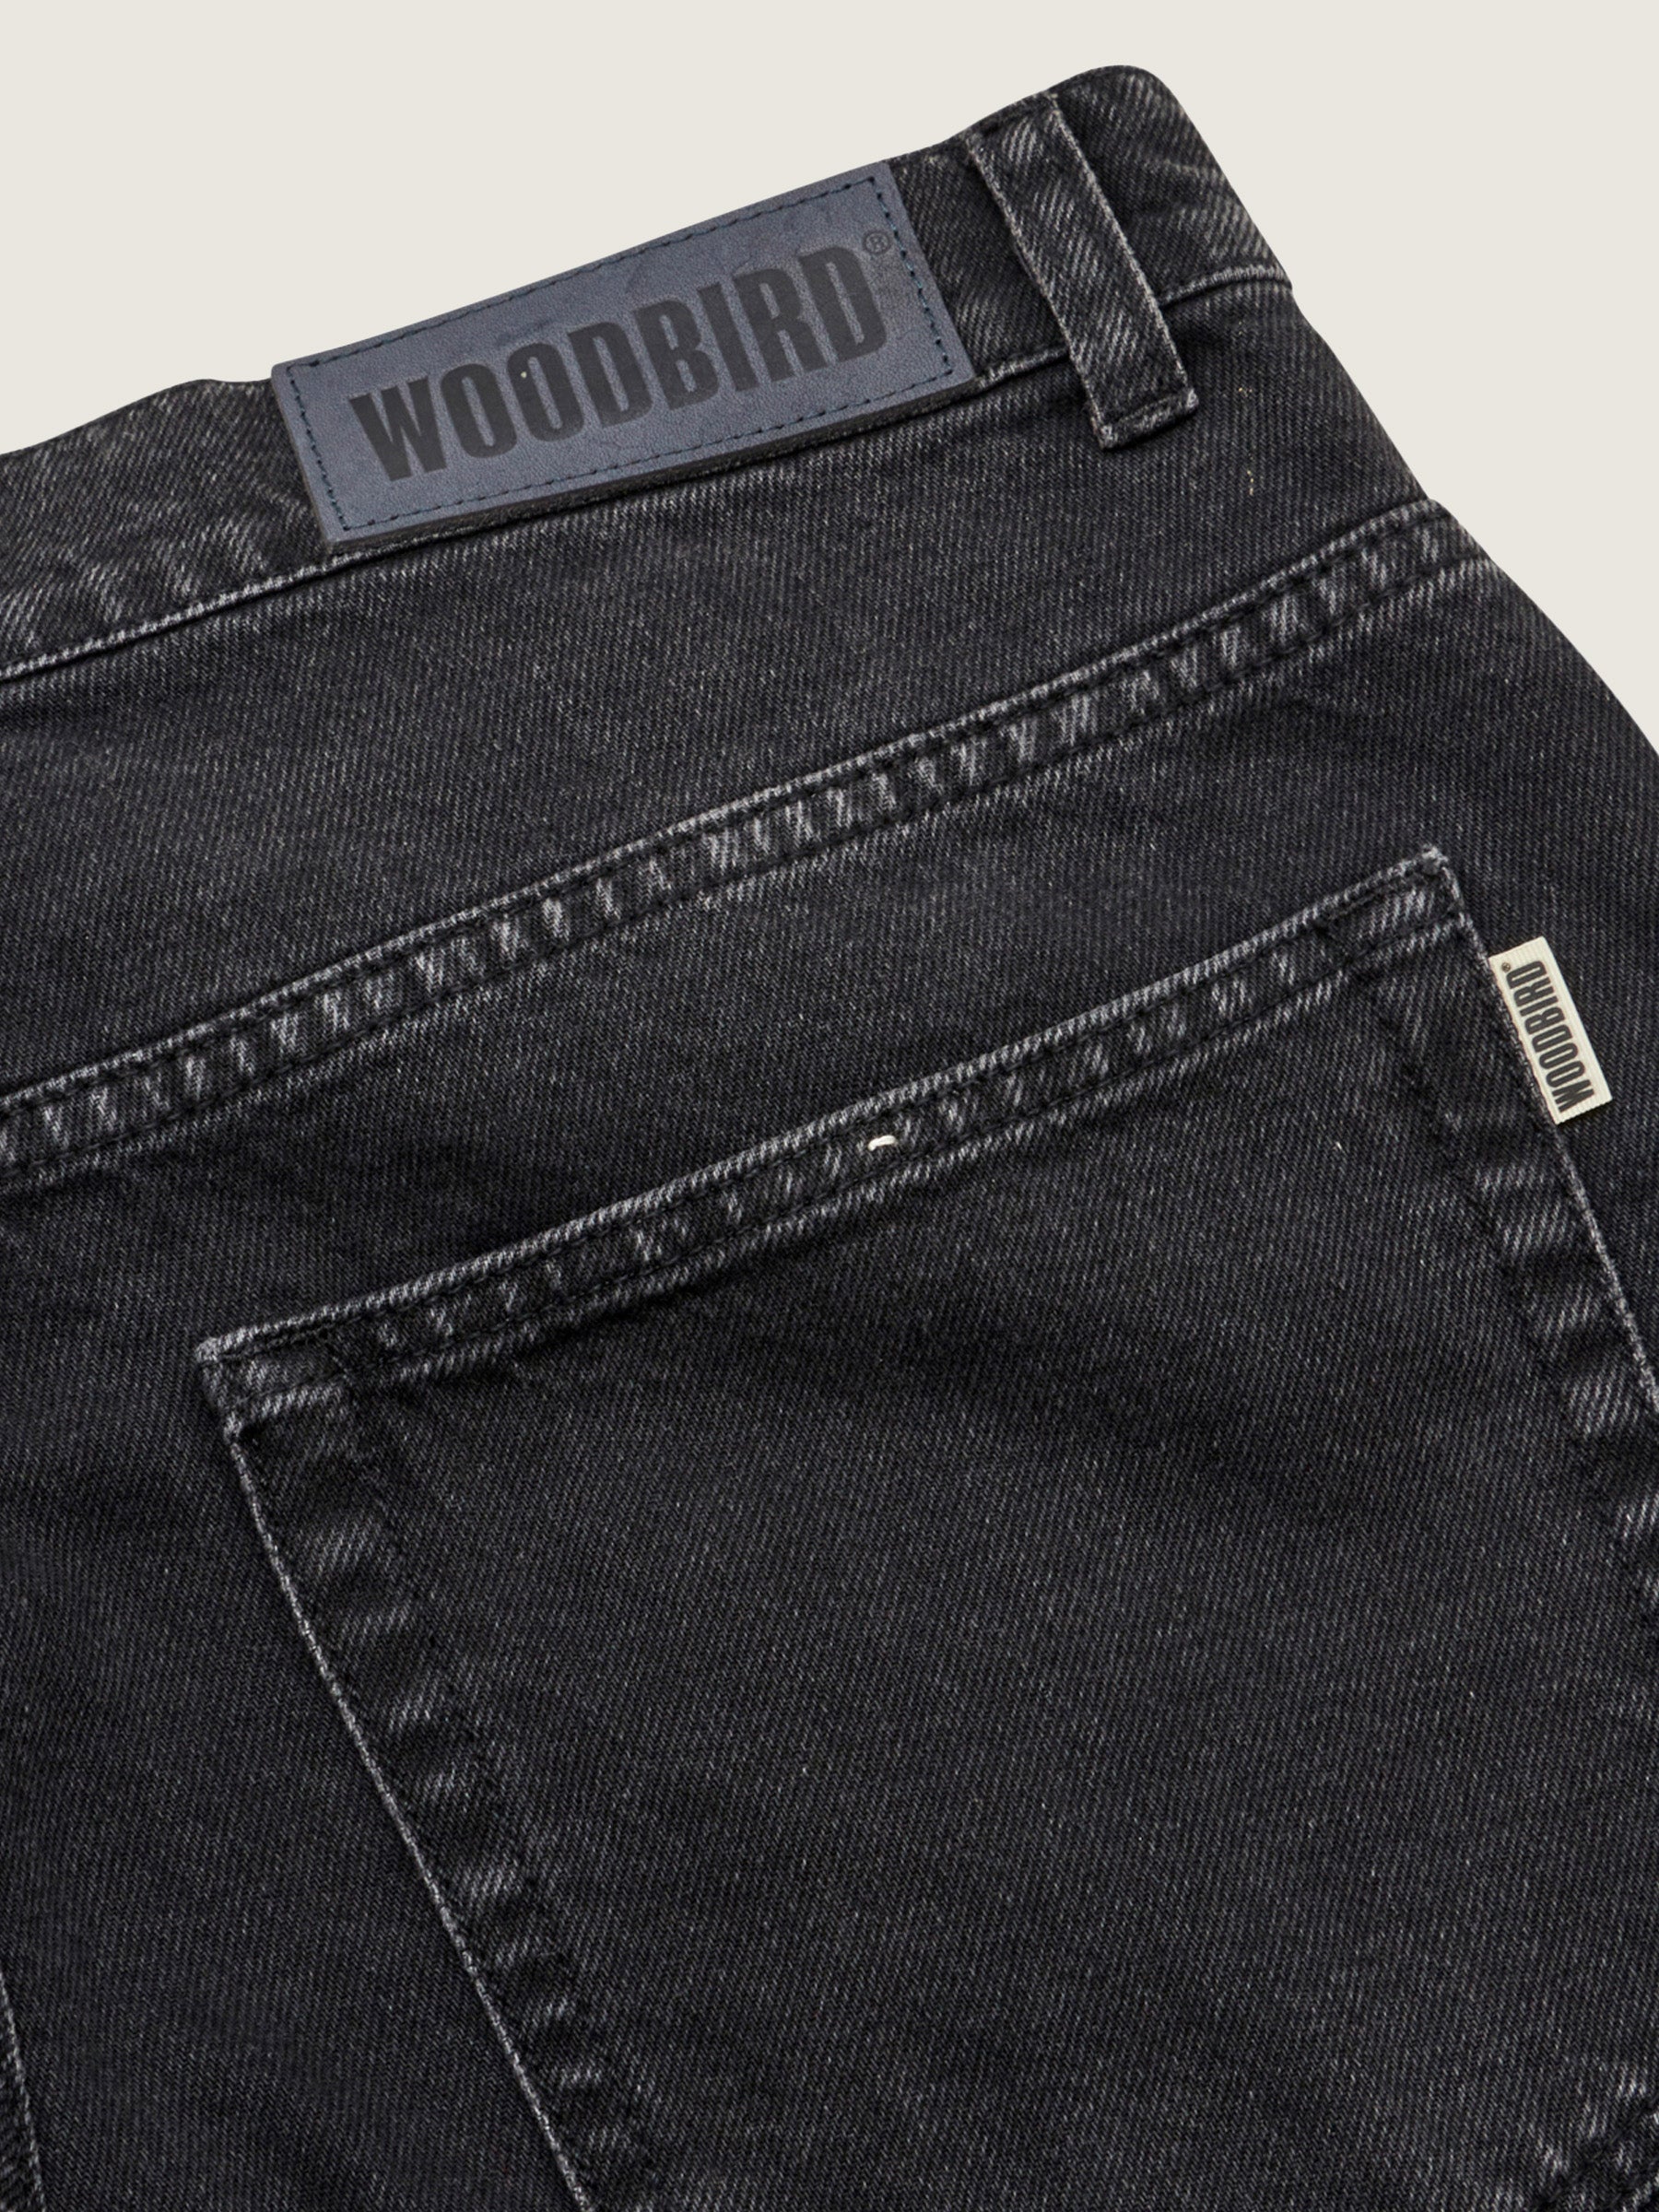 Woodbird WBRami Crow Jeans Jeans Black Vintage